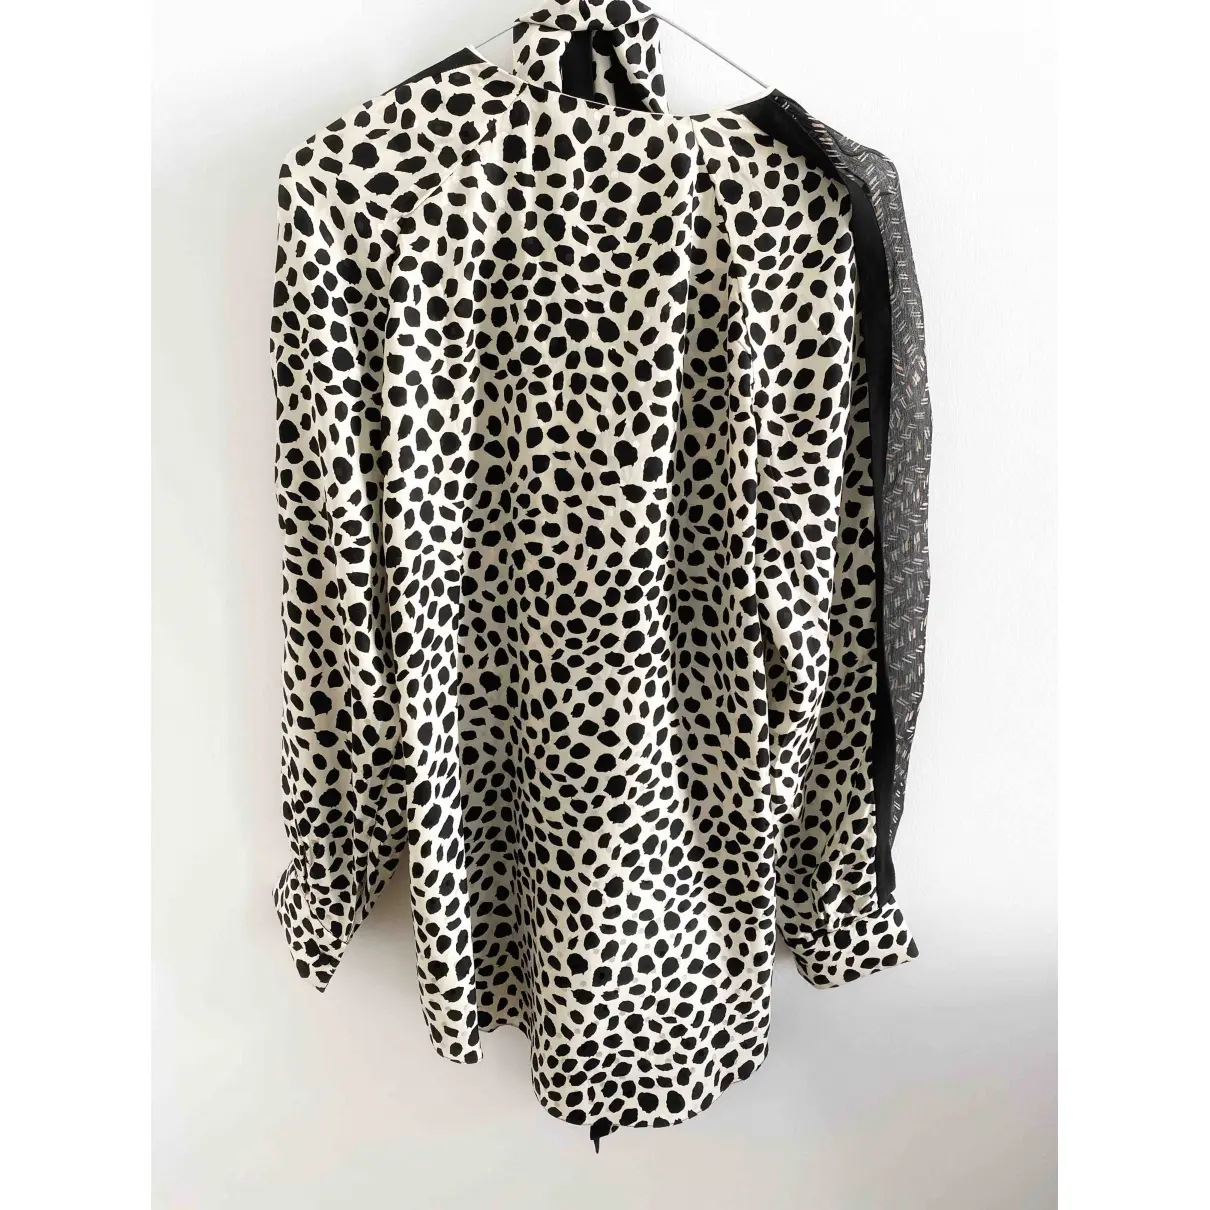 Buy Chloé Silk blouse online